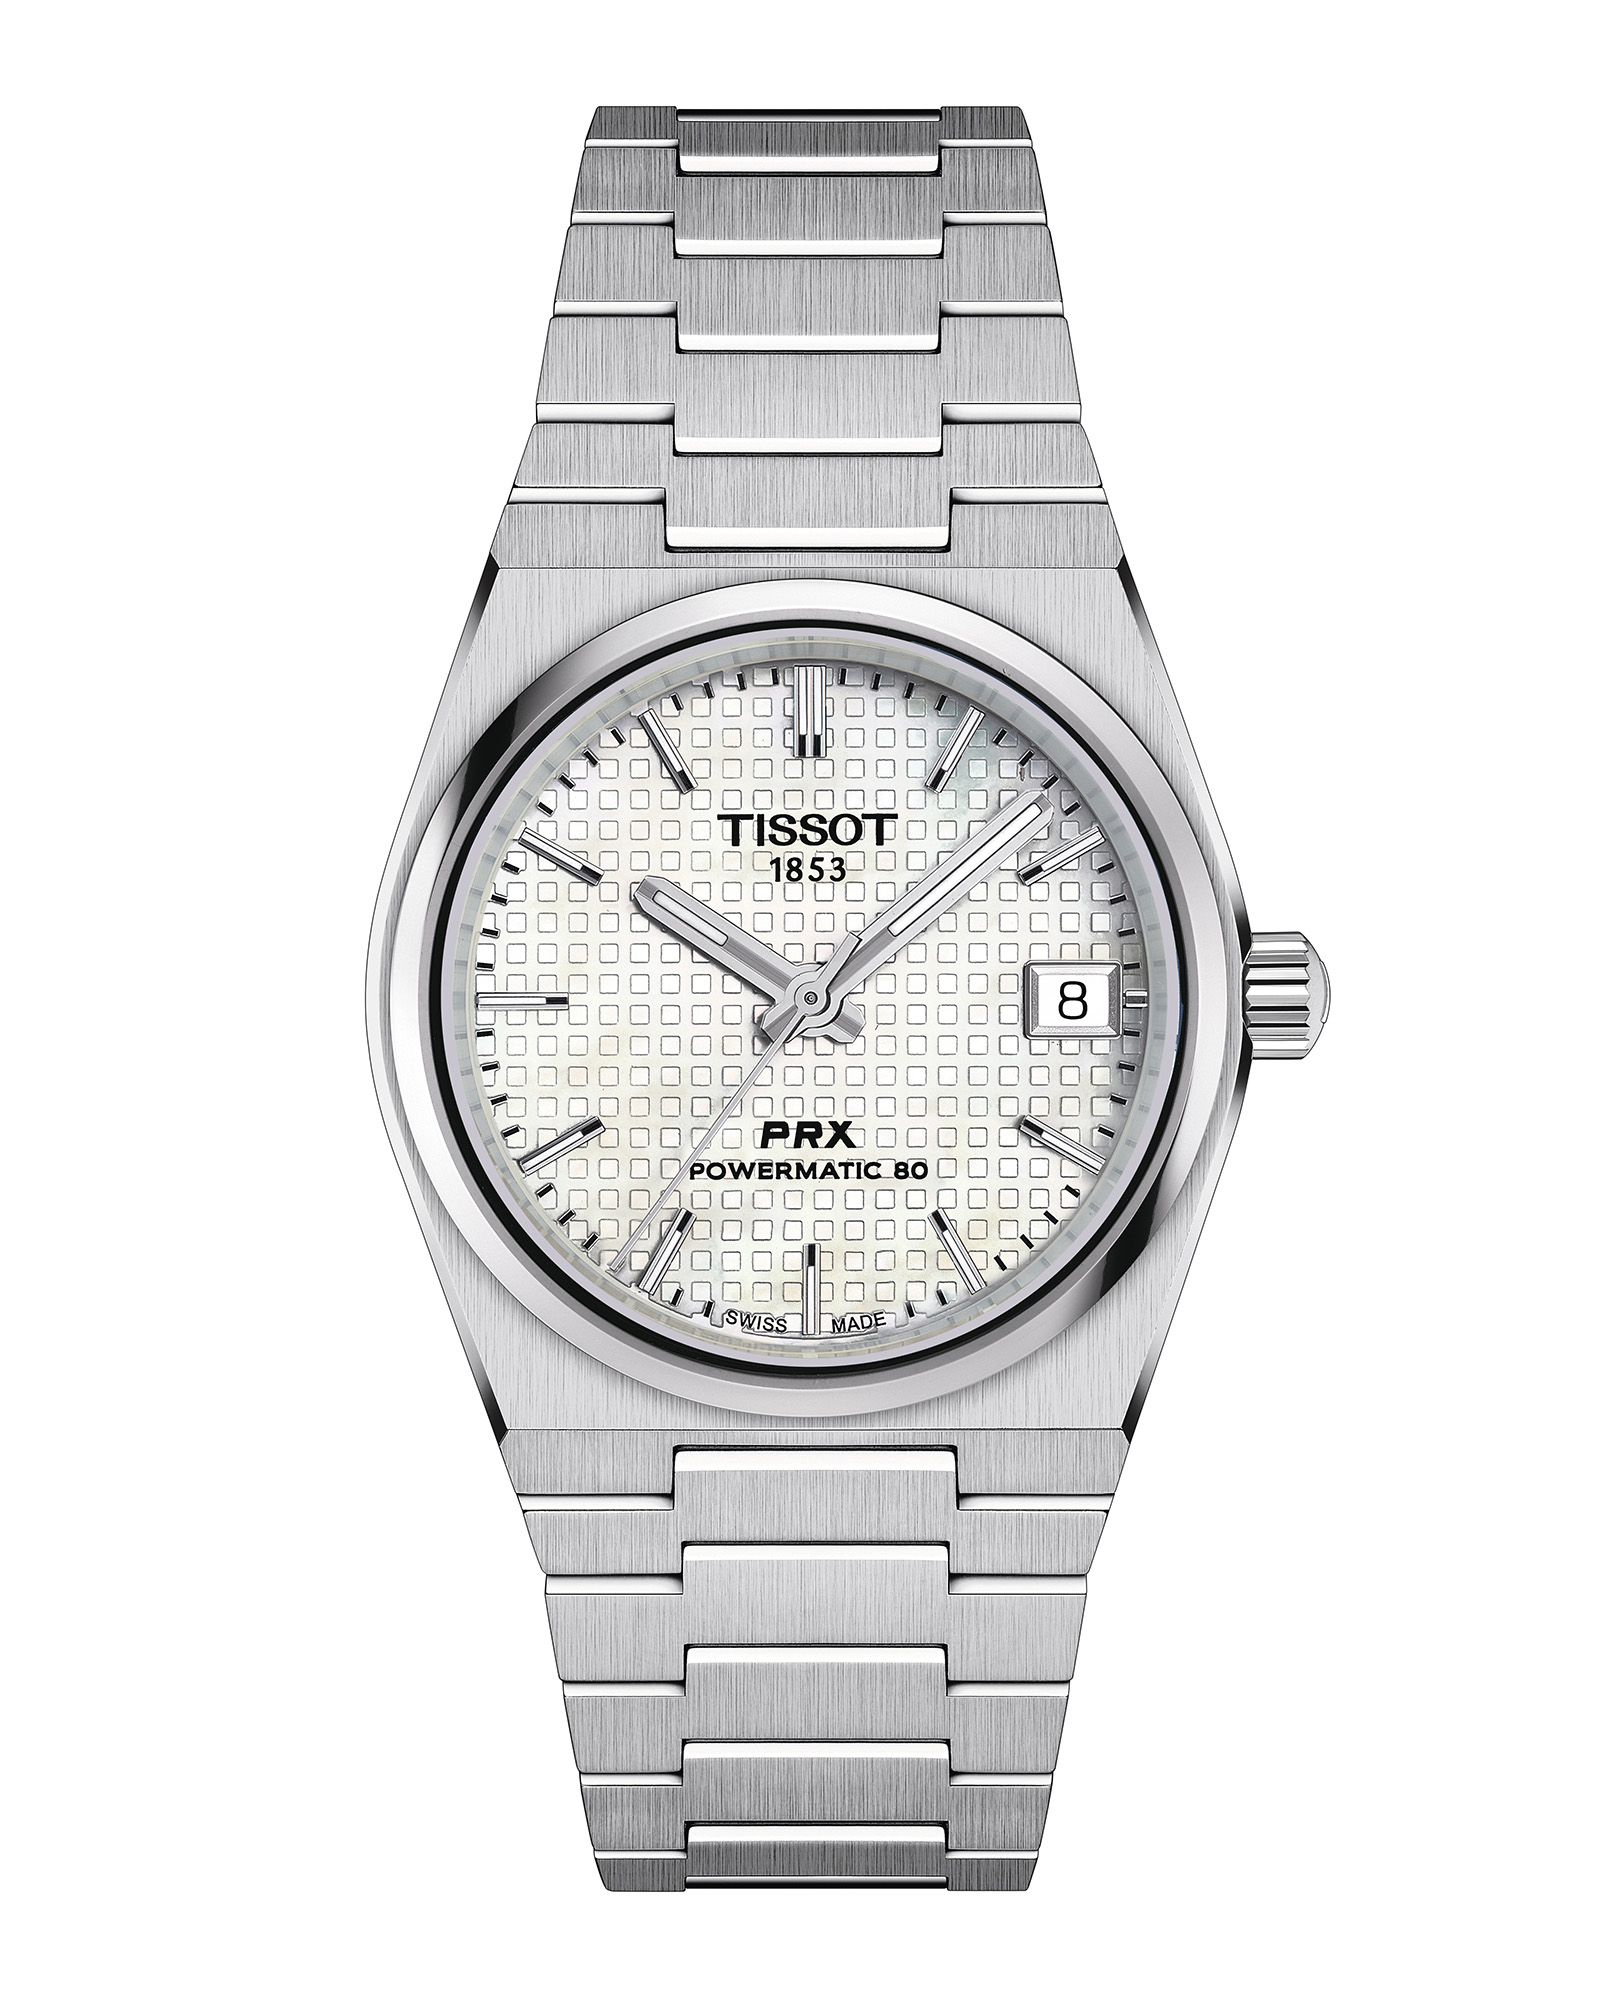 Новинка: автоматические часы Tissot PRX 35 мм